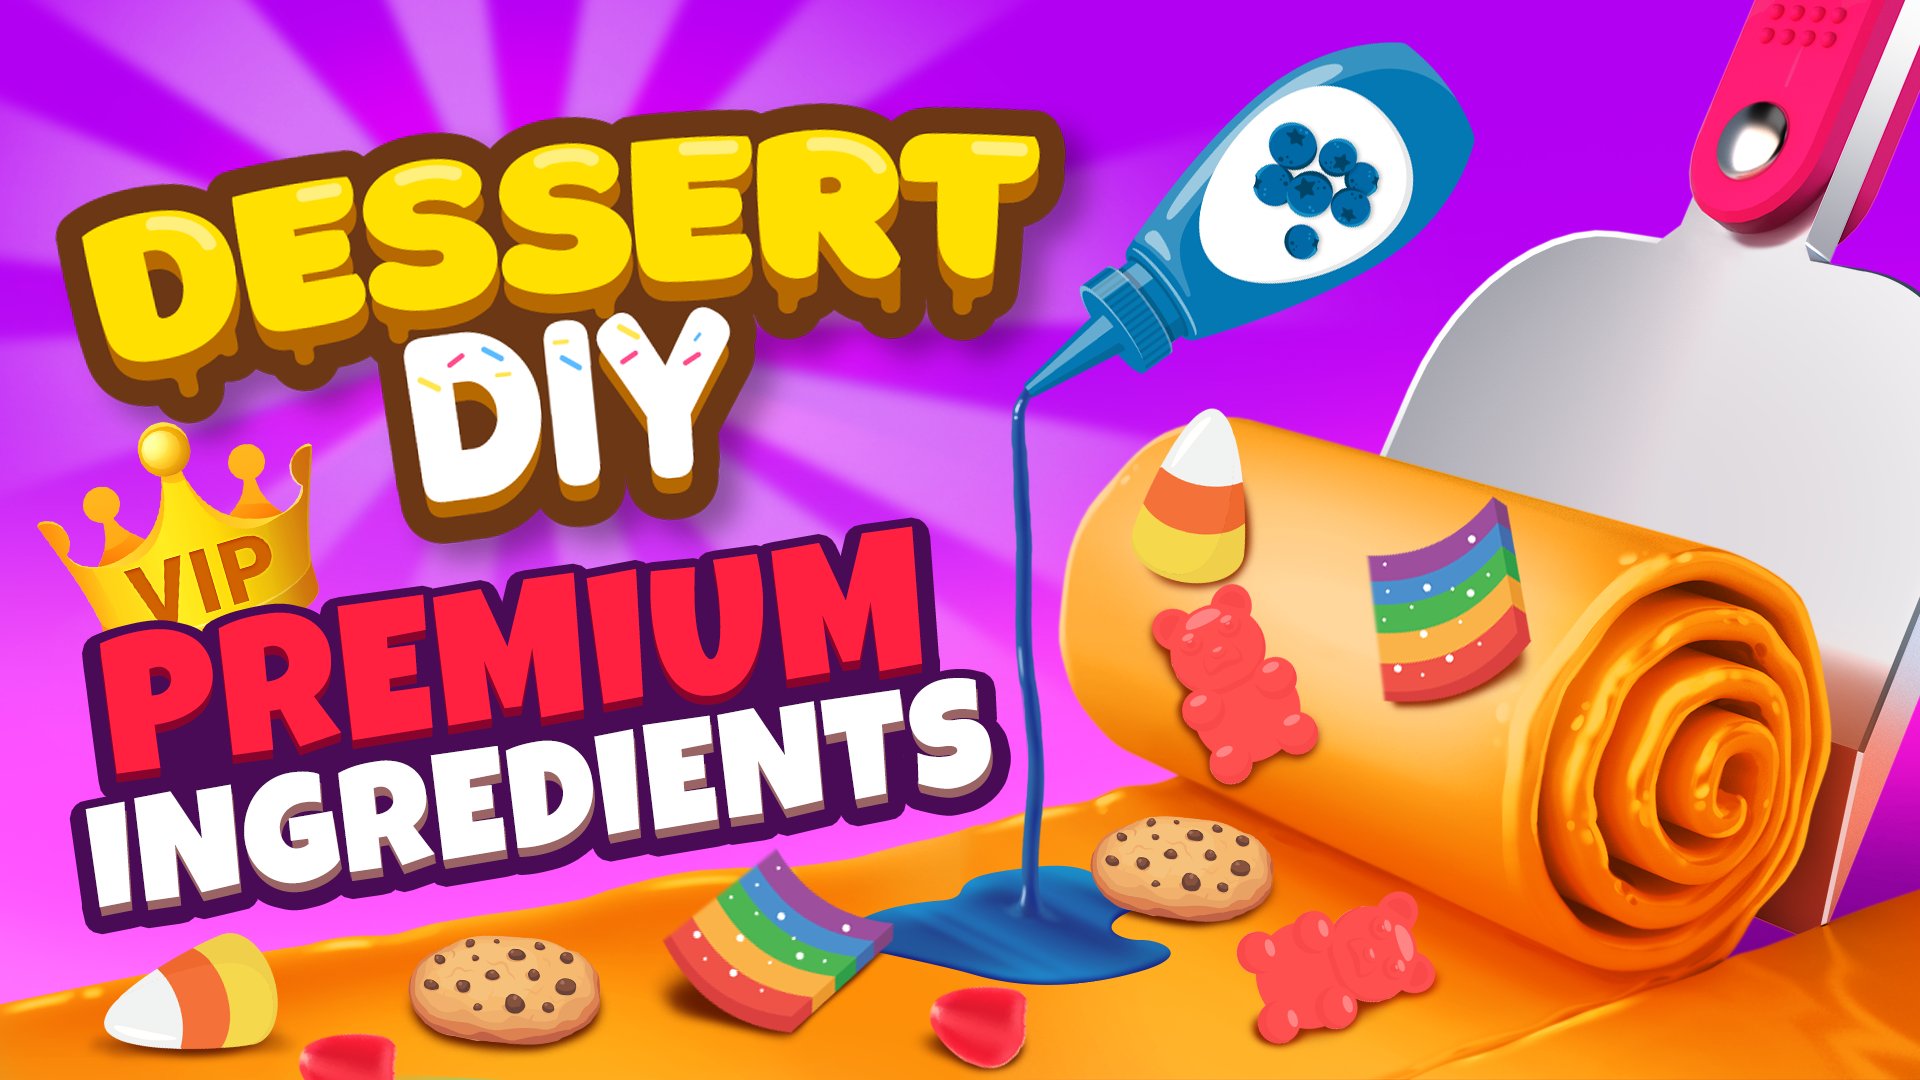 Dessert DIY: Premium ingredients